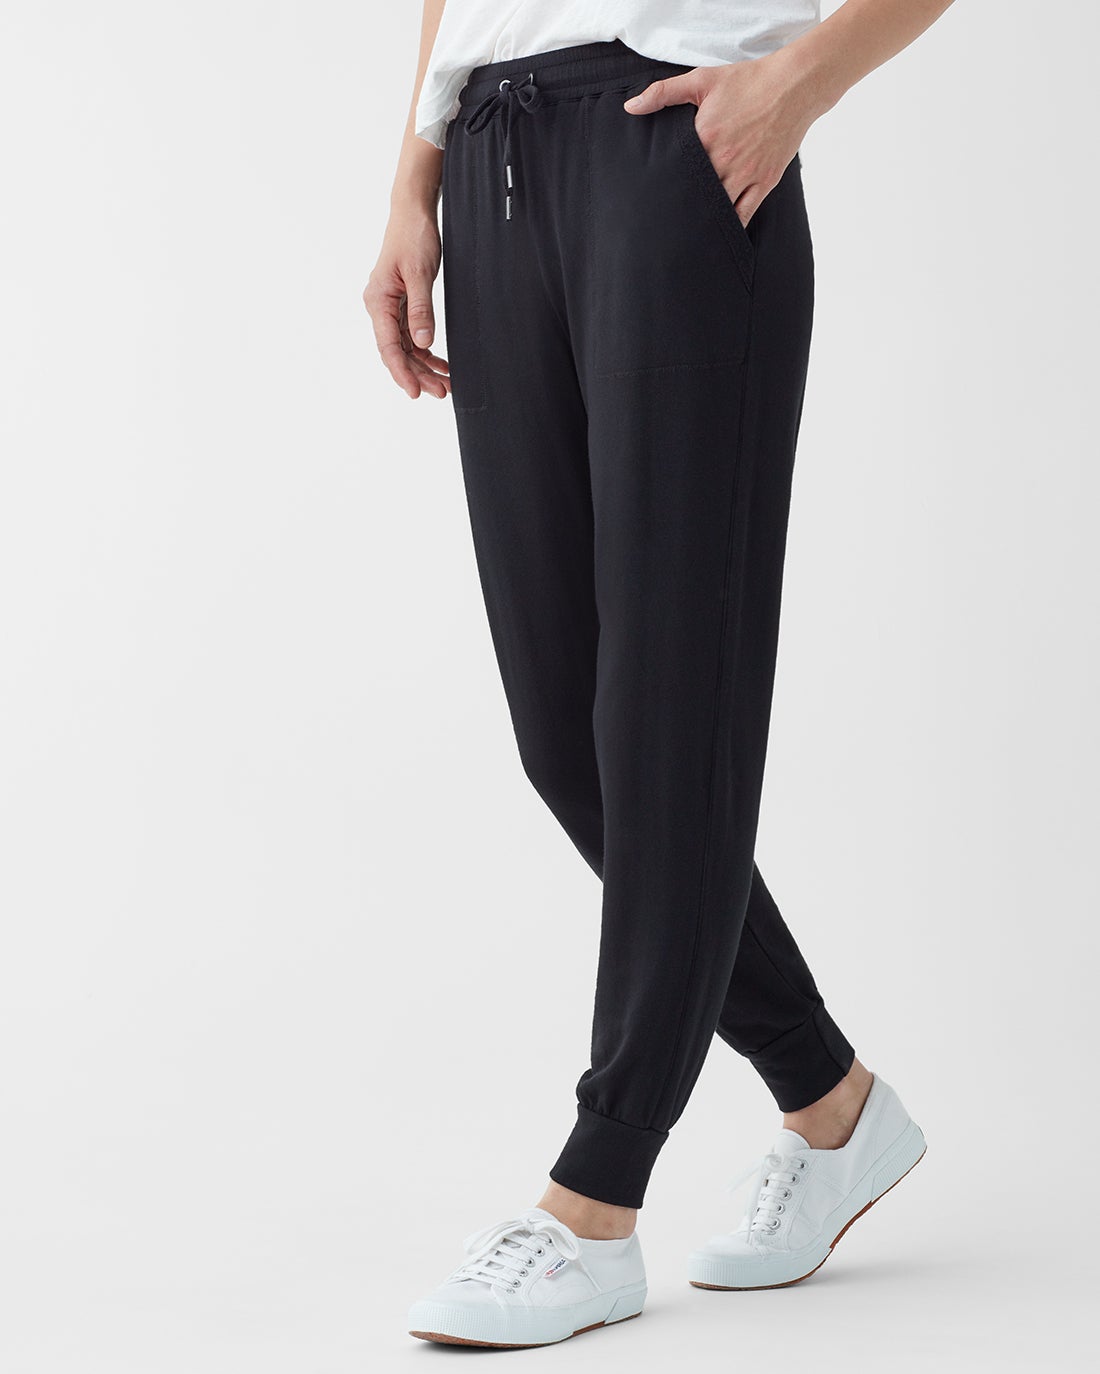 Splendid Black Super Soft Knit Joggers Casual Pants Sweatpants Size Medium